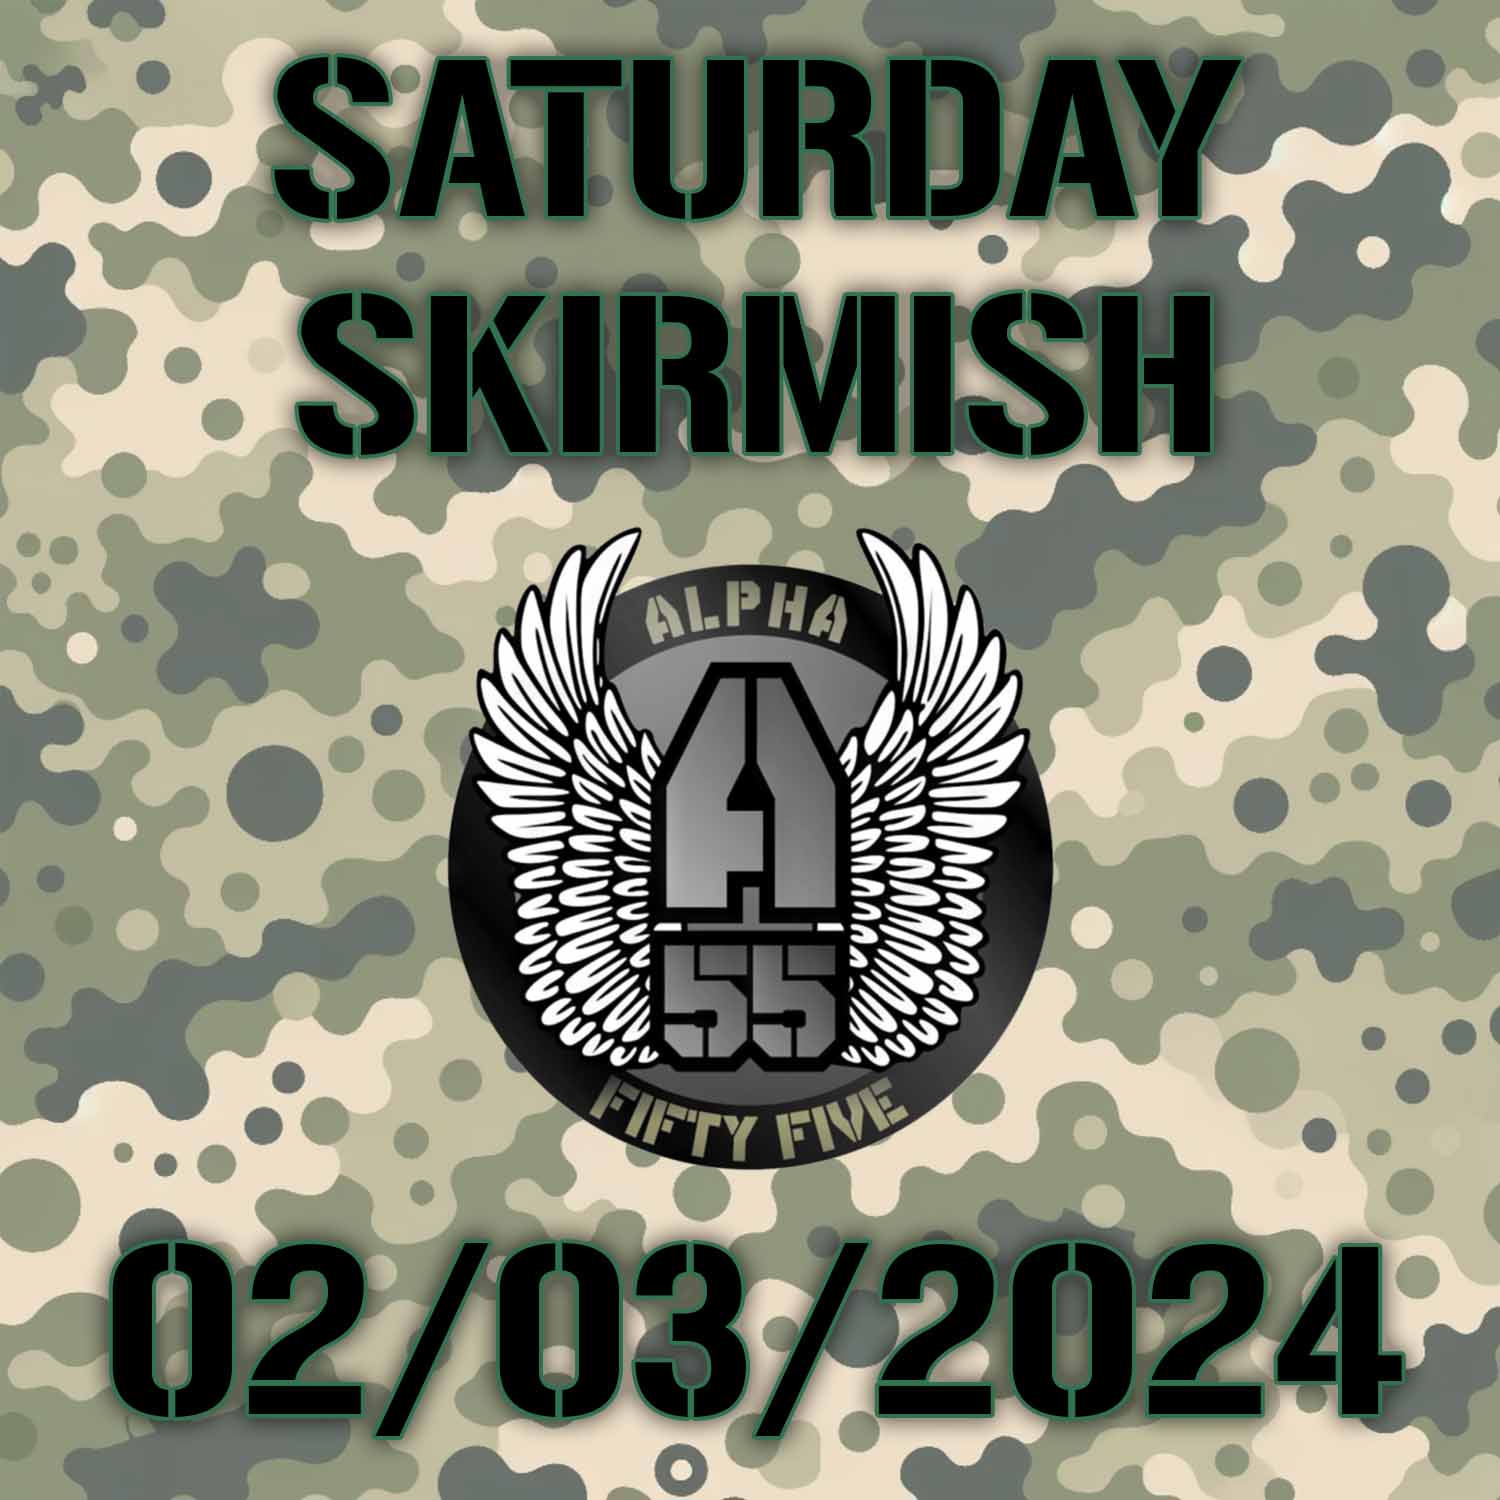 Saturday 'Skirmish' - 02/03/2024